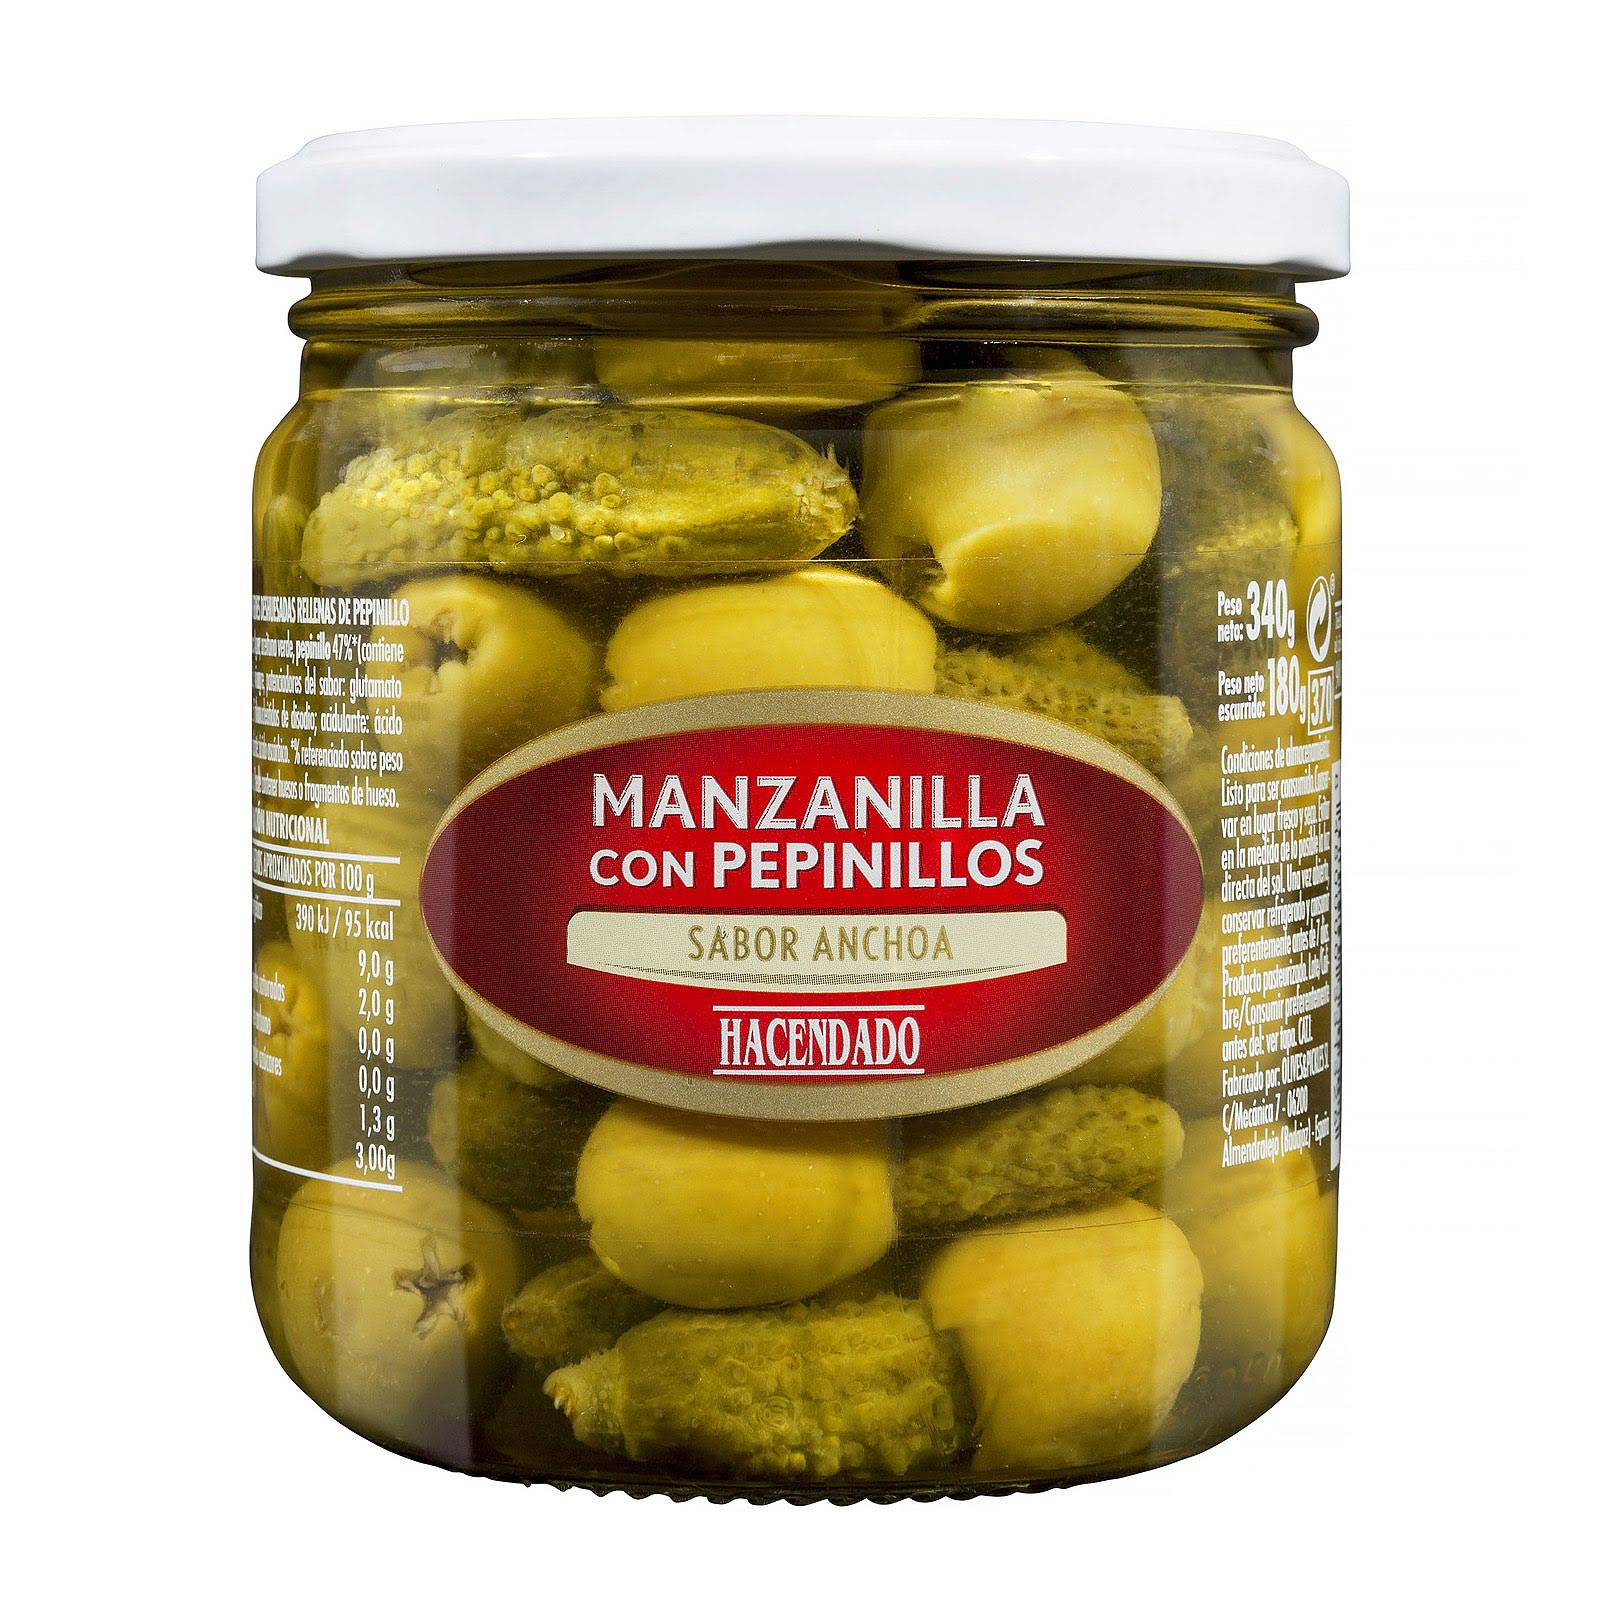 Aceitunas verdes manzanilla con pepinillos sabor anchoa Hacendado